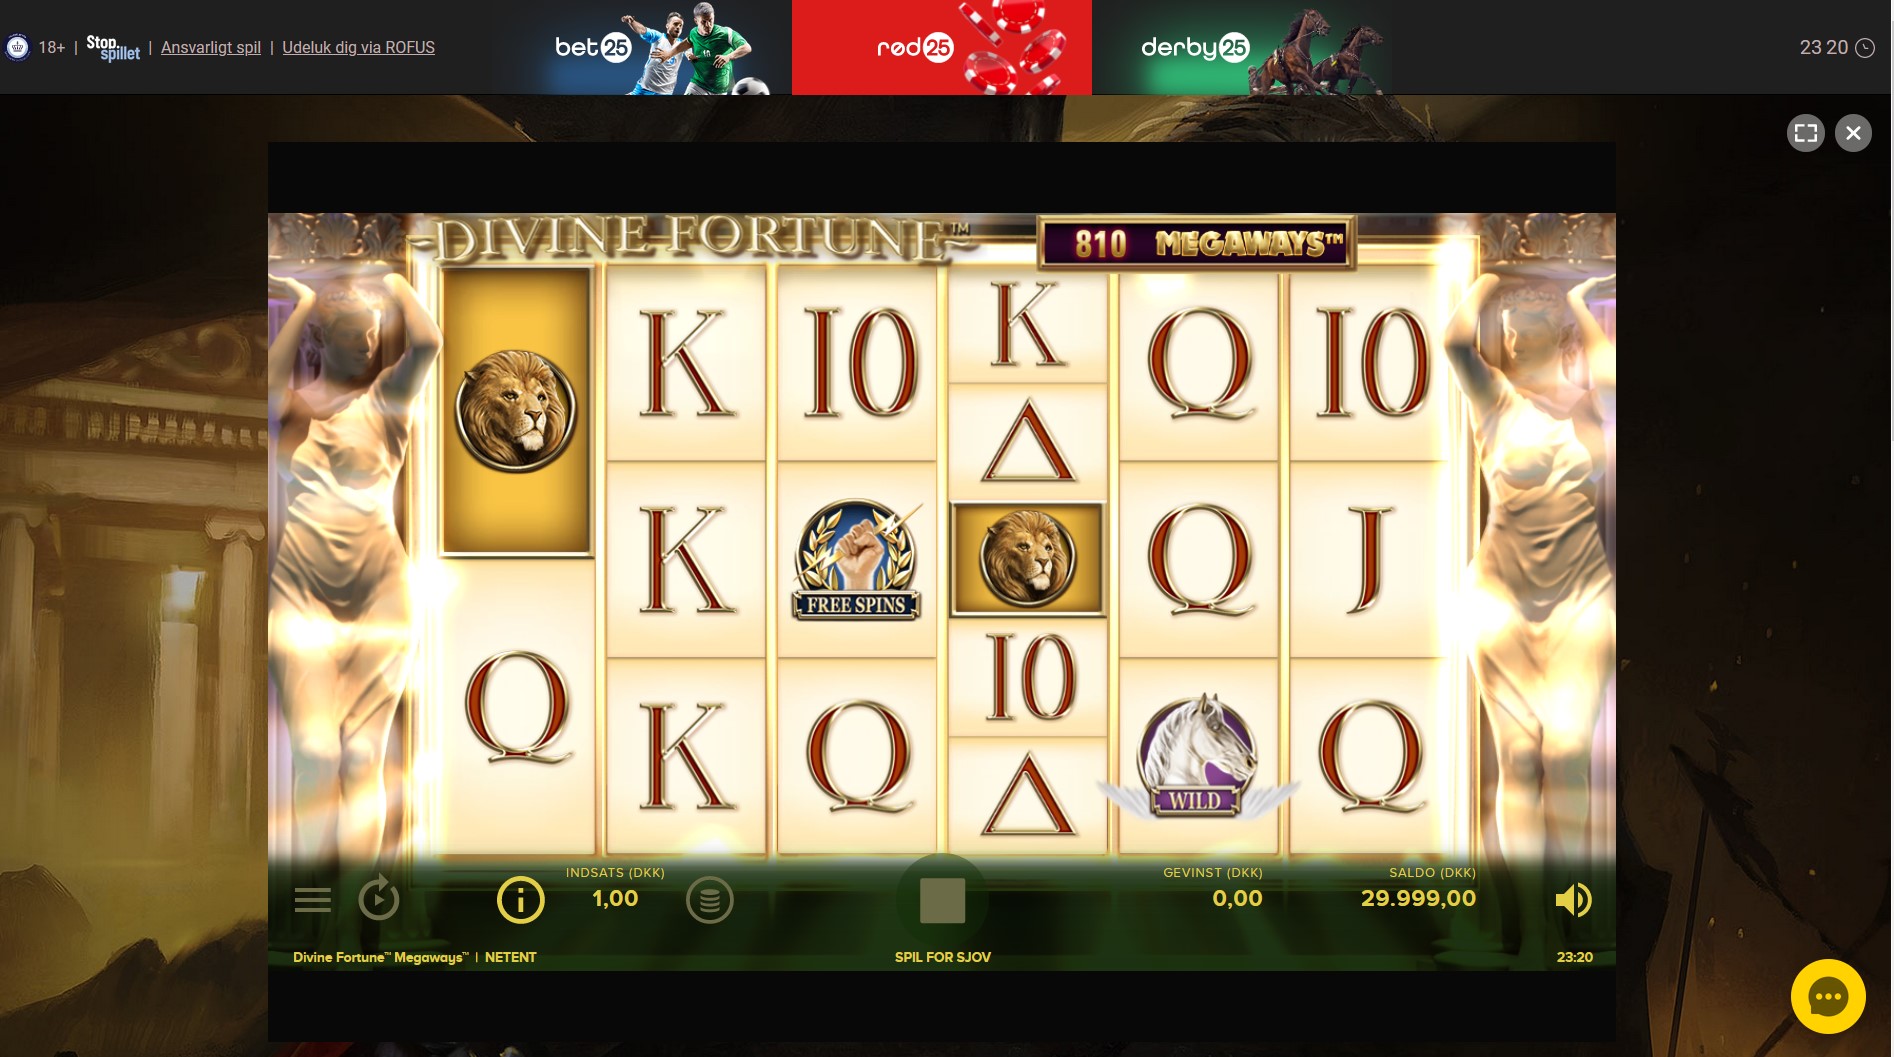 Rod 25 Casino Slot Games